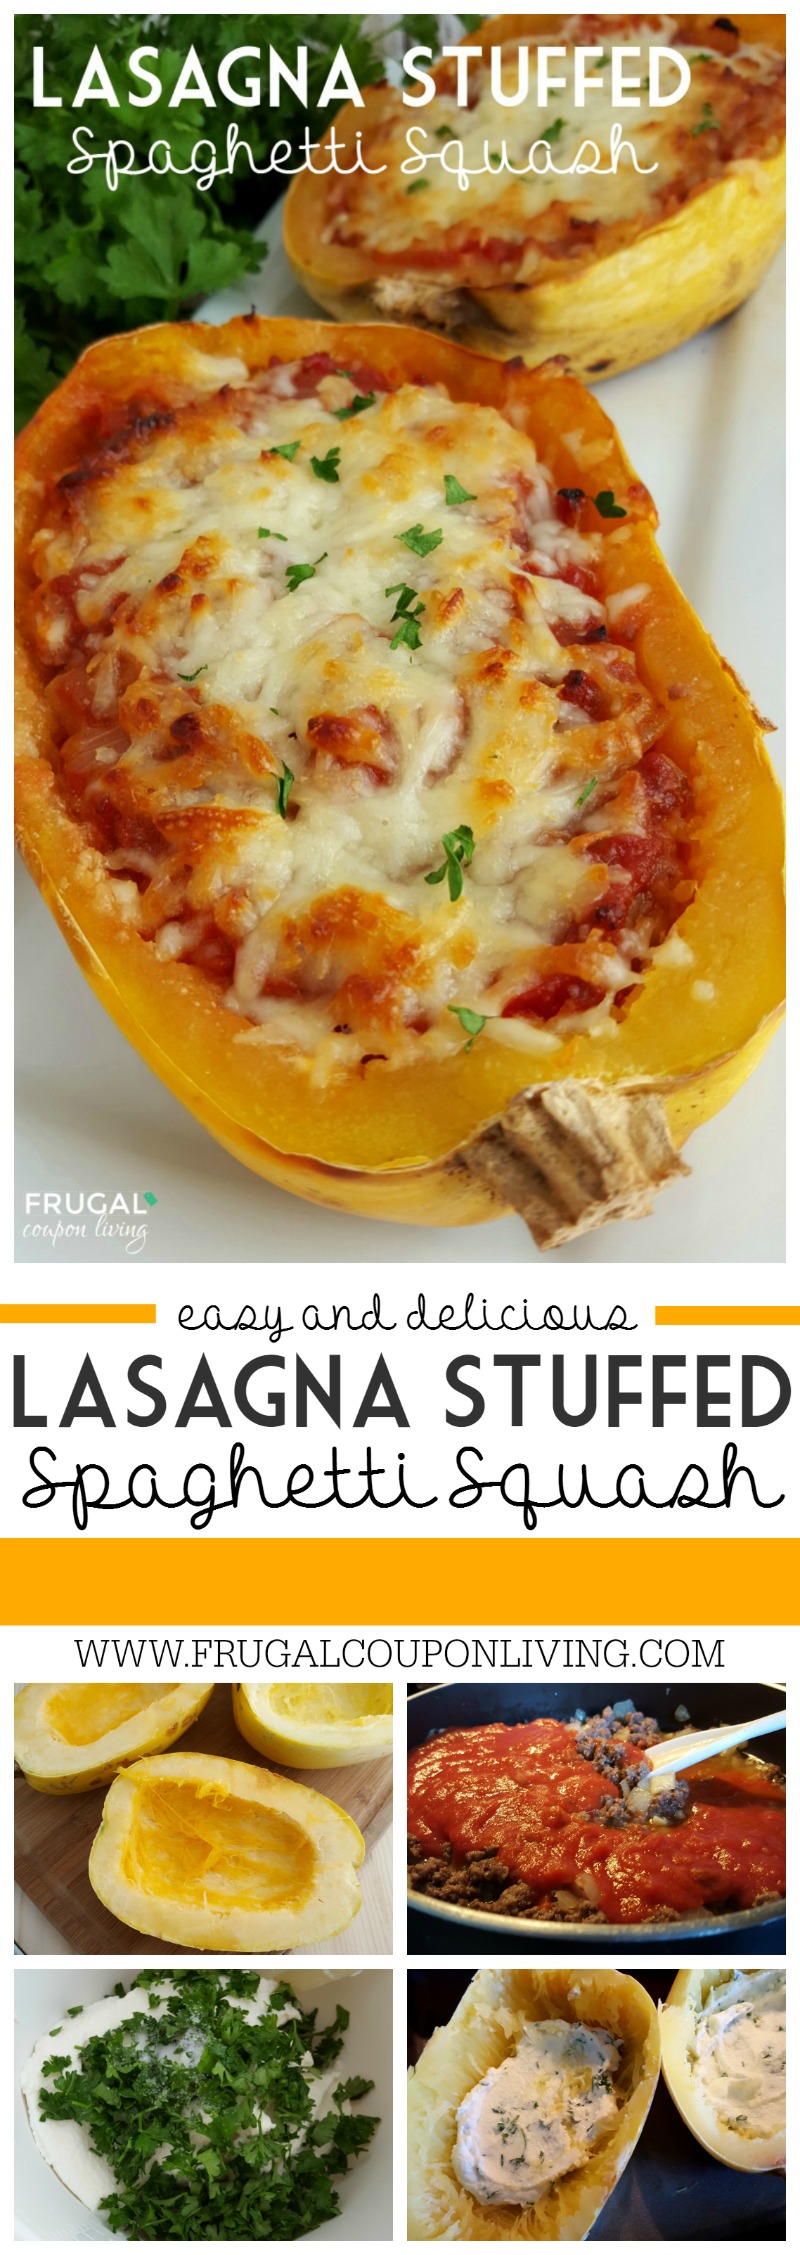 Stuffed Spaghetti Squash Lasagna on Frugal Coupon Living collage